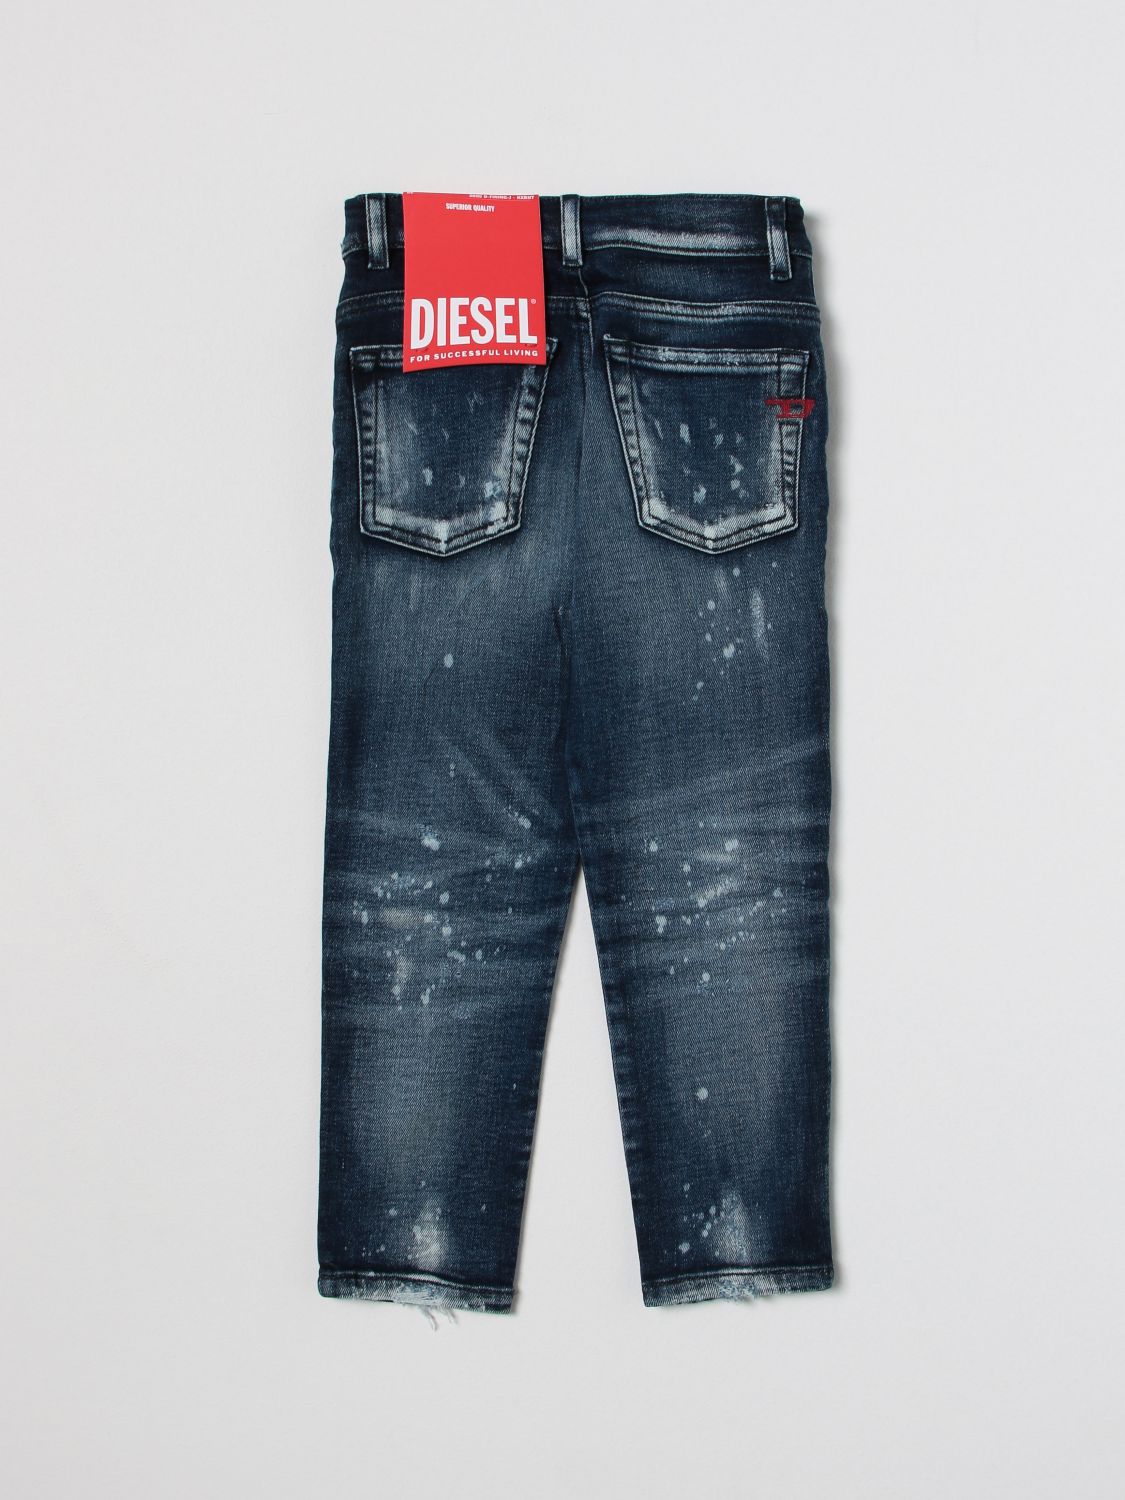 jeans for boys - Denim | Diesel J00805KXBHT online on GIGLIO.COM